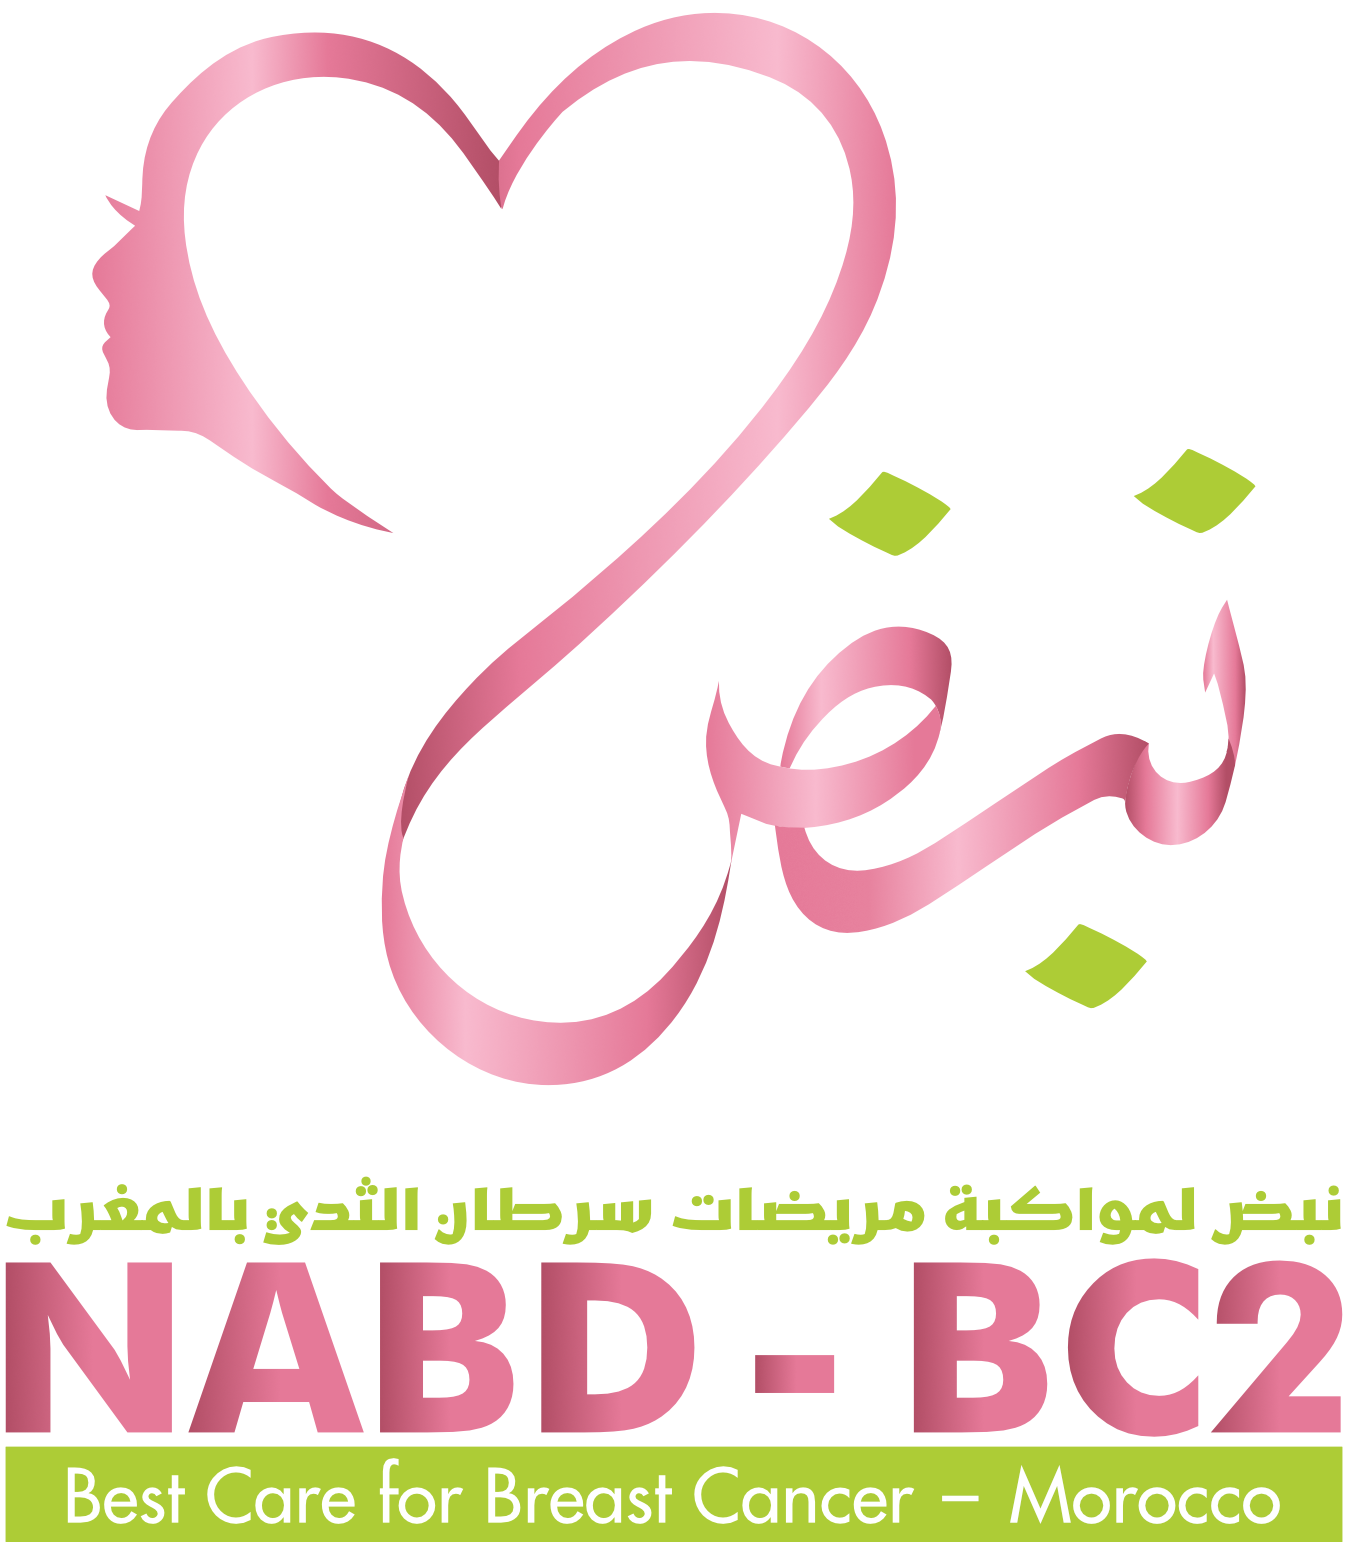 NABD-BC2 Logo Vertical